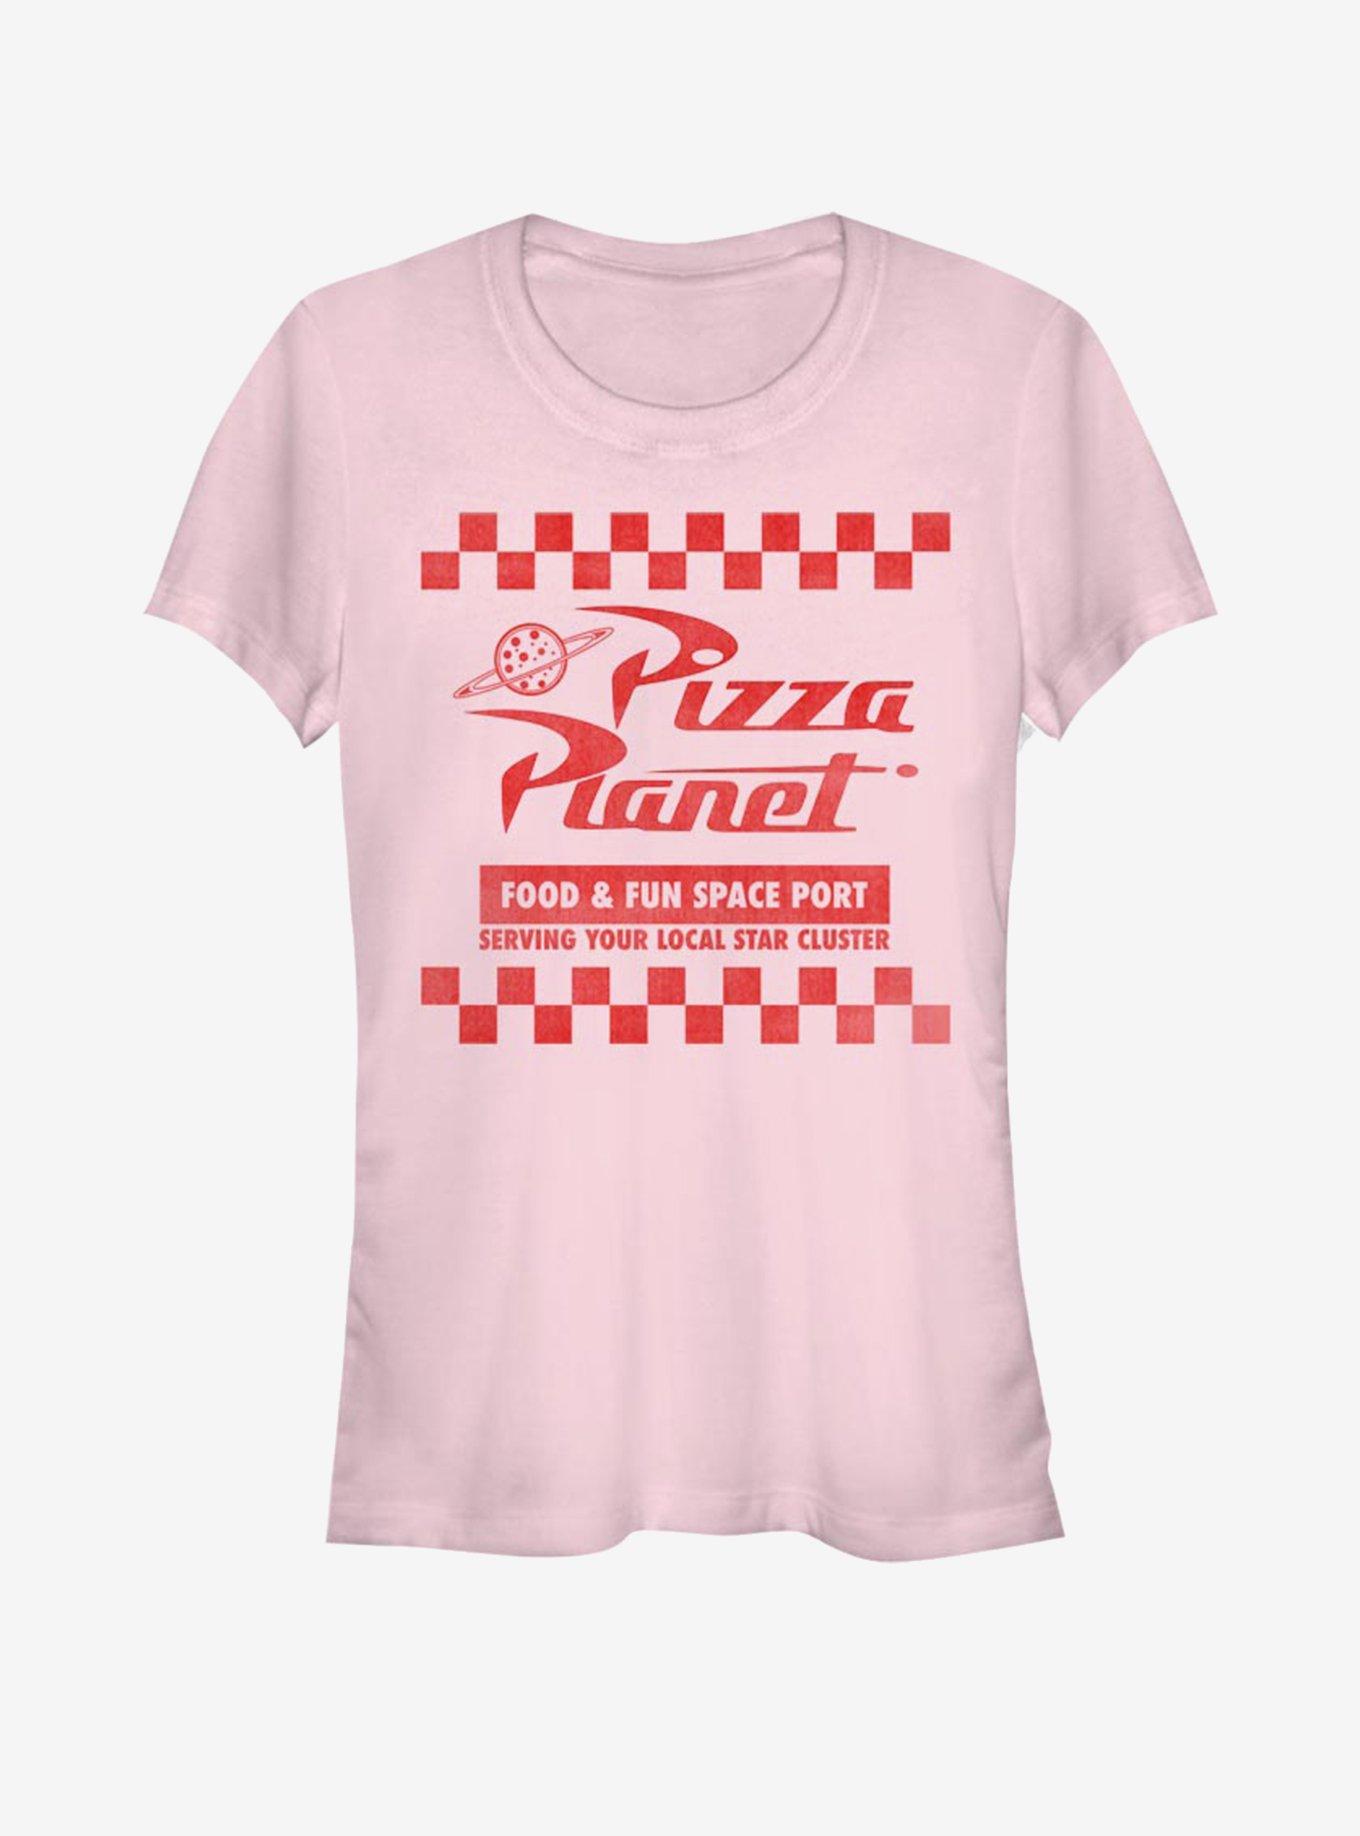 Disney Pixar Toy Story Pizza Planet Box Girls T-Shirt